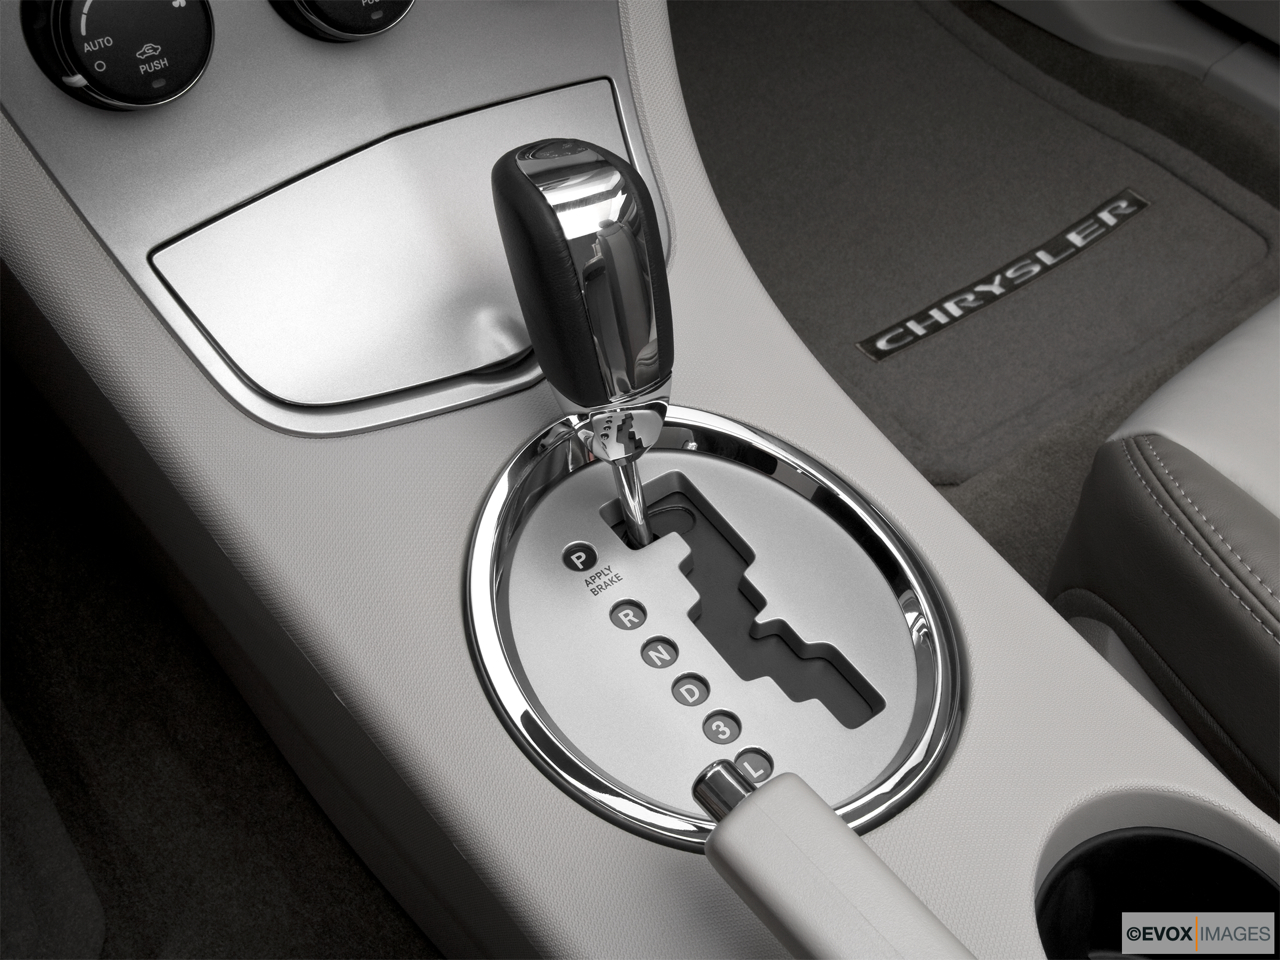 2010 Chrysler Sebring Touring Gear shifter/center console. 